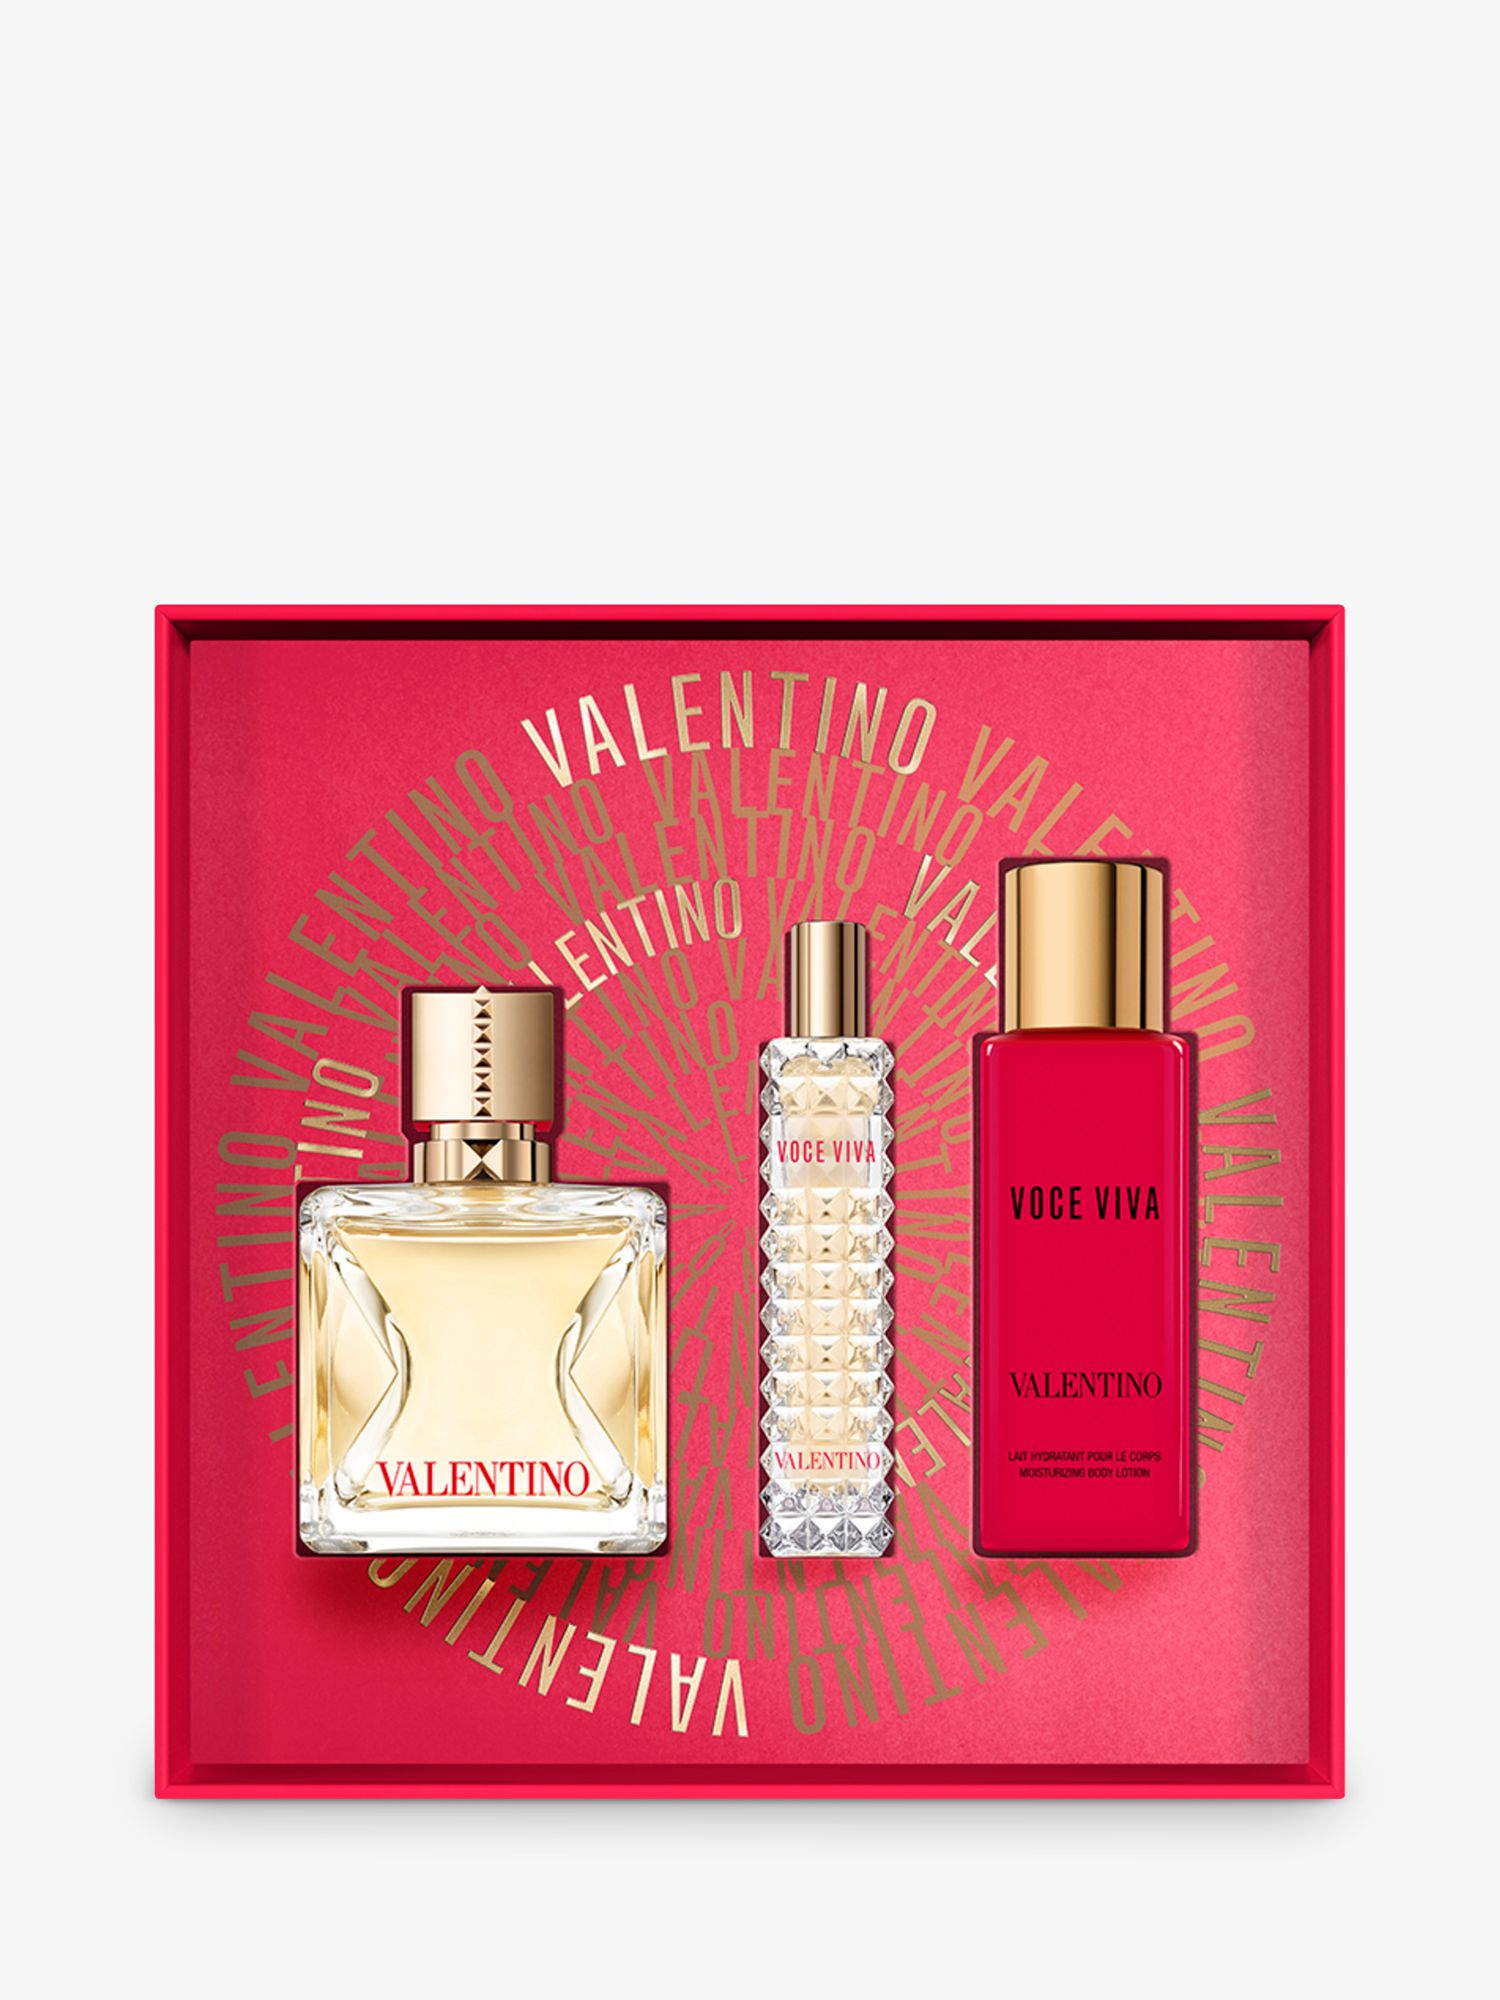 Valentino Voce Viva Eau de Parfum 100ml Fragrance Gift Set